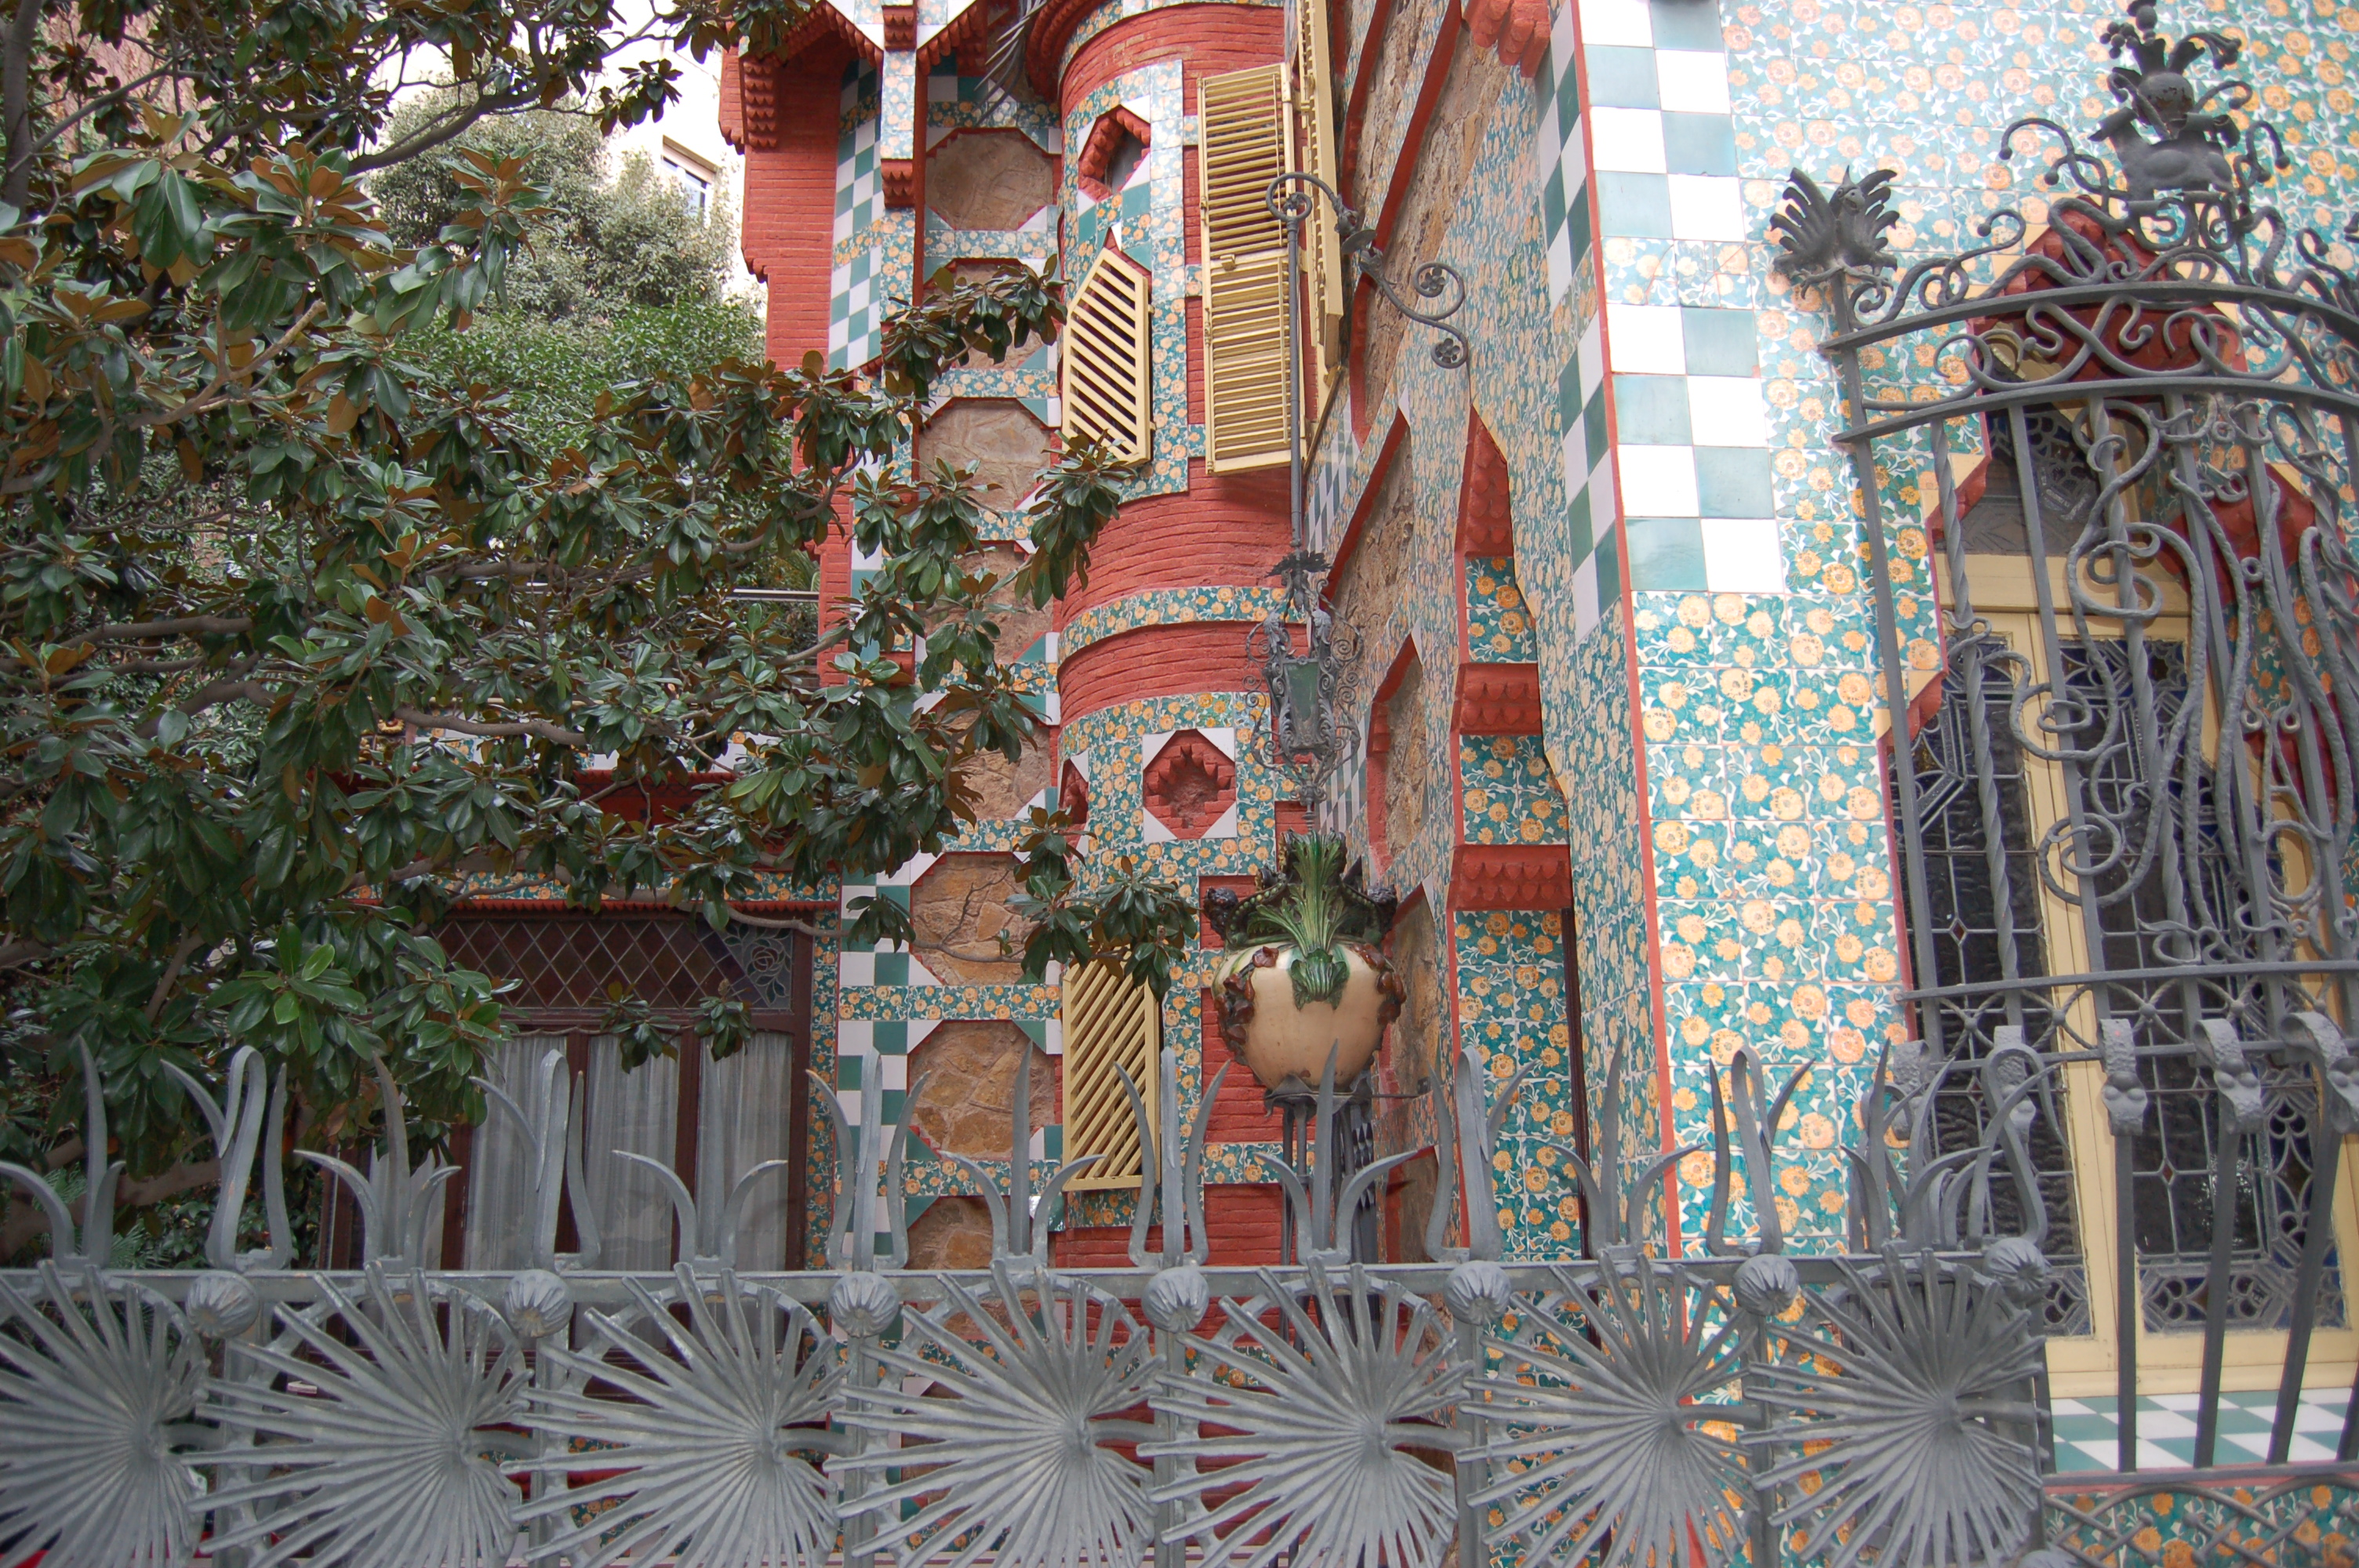 Le case di Gaudì